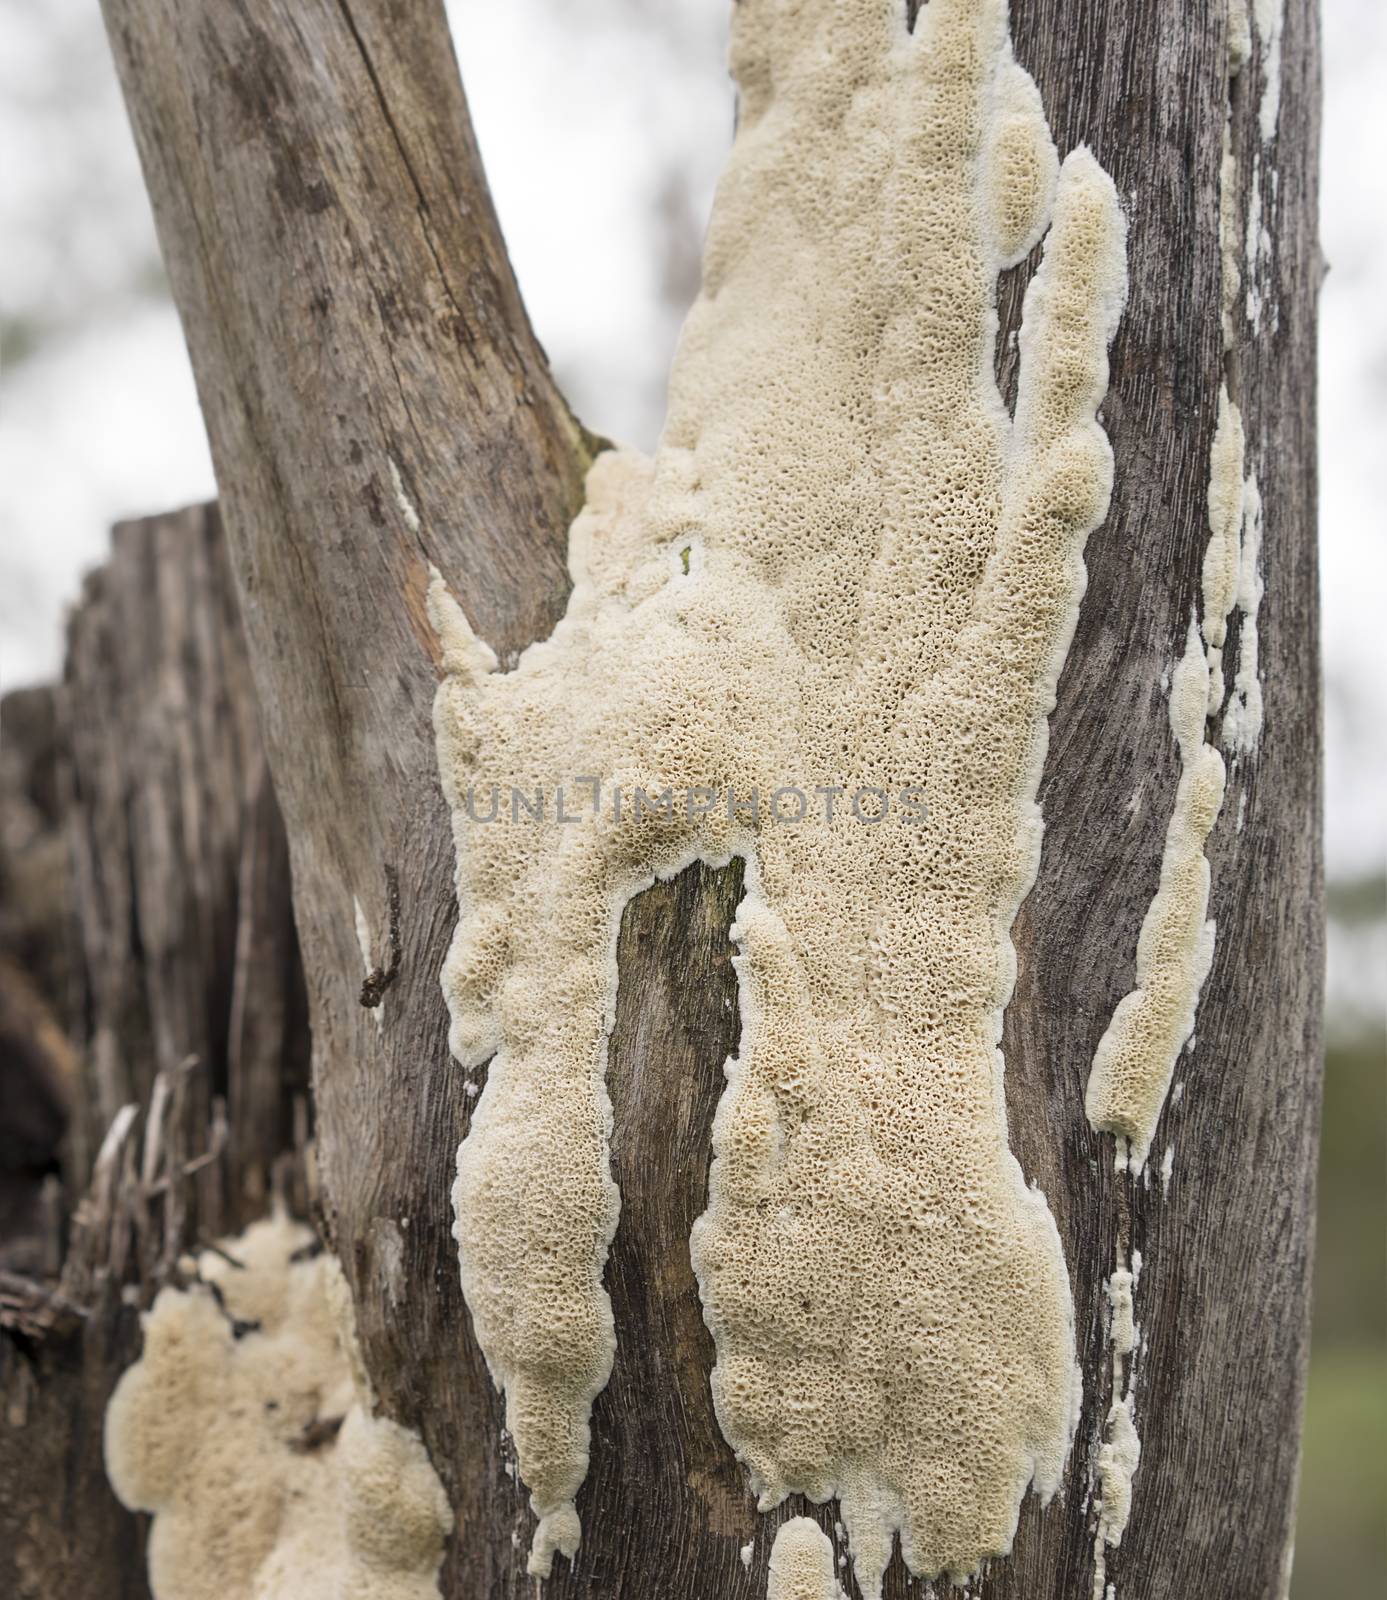 Australian Polypore Fungus Growing on Eucalypt Stump by sherj